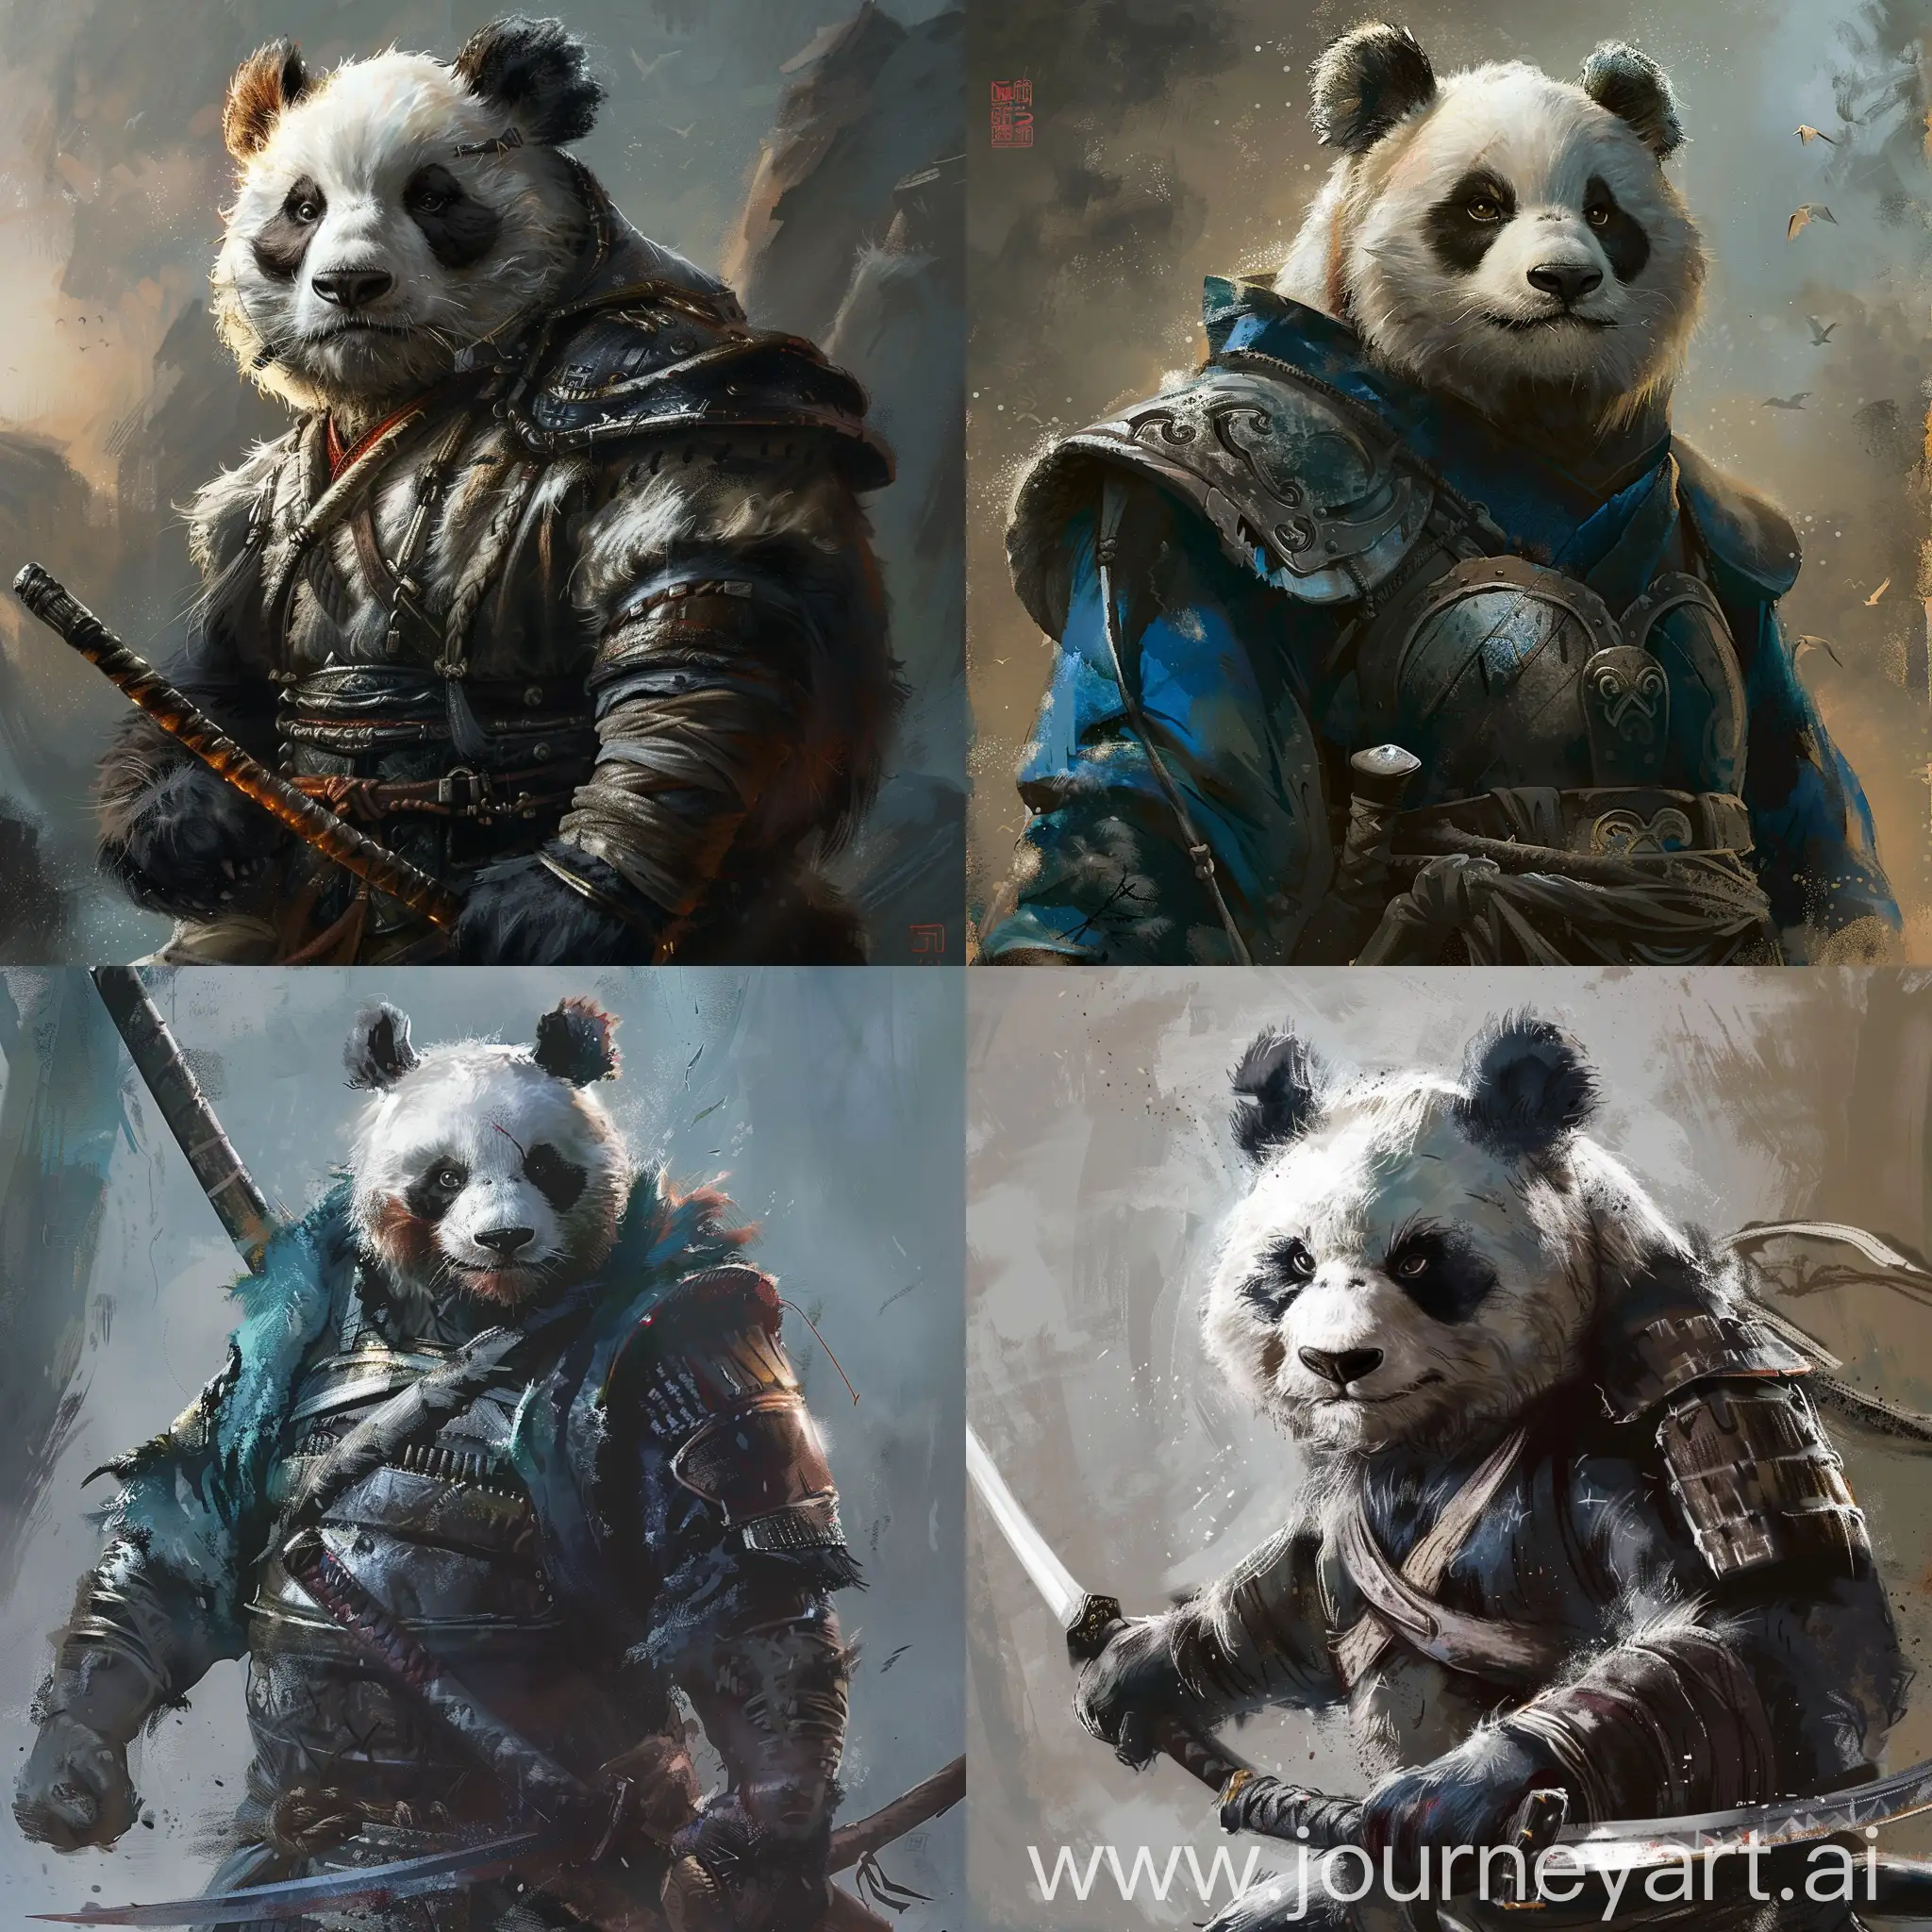 Majestic-Warrior-Panda-in-a-11-Aspect-Ratio-Battle-Scene